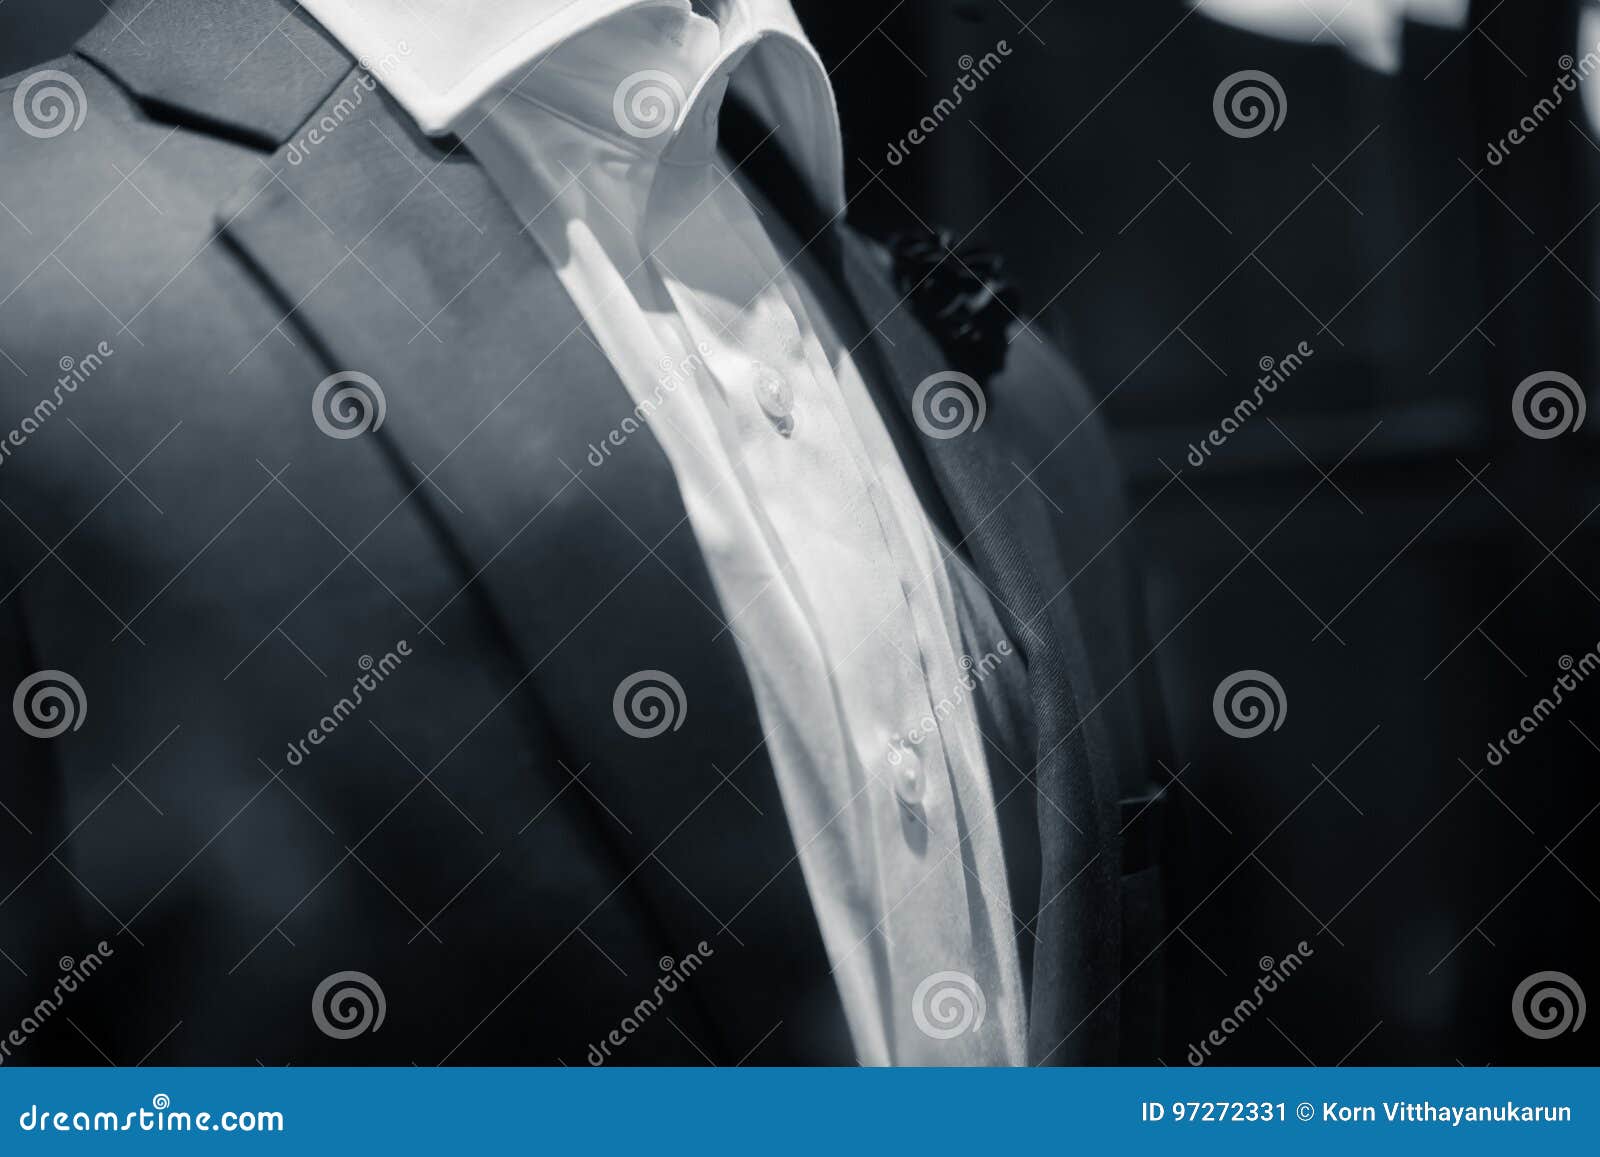 Gentle Man Closeup Groom Tuxedo Suit Stock Image - Image of black ...